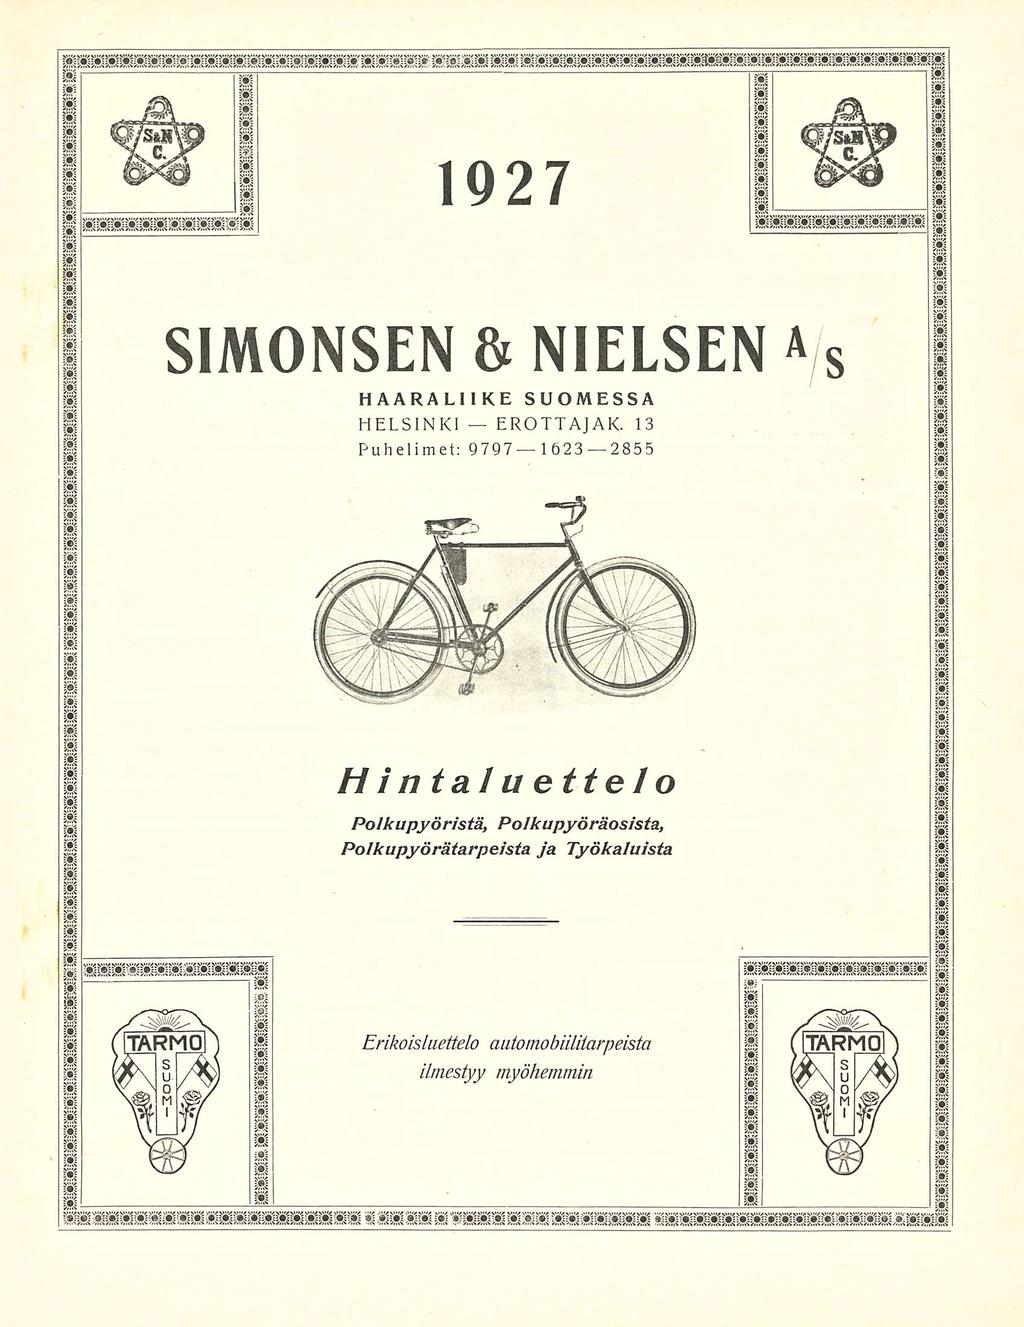 1927 SIMONSEN & NIELSEN HAARA LI I KE SUOMESSA HELSINKI EROTTAJAK.